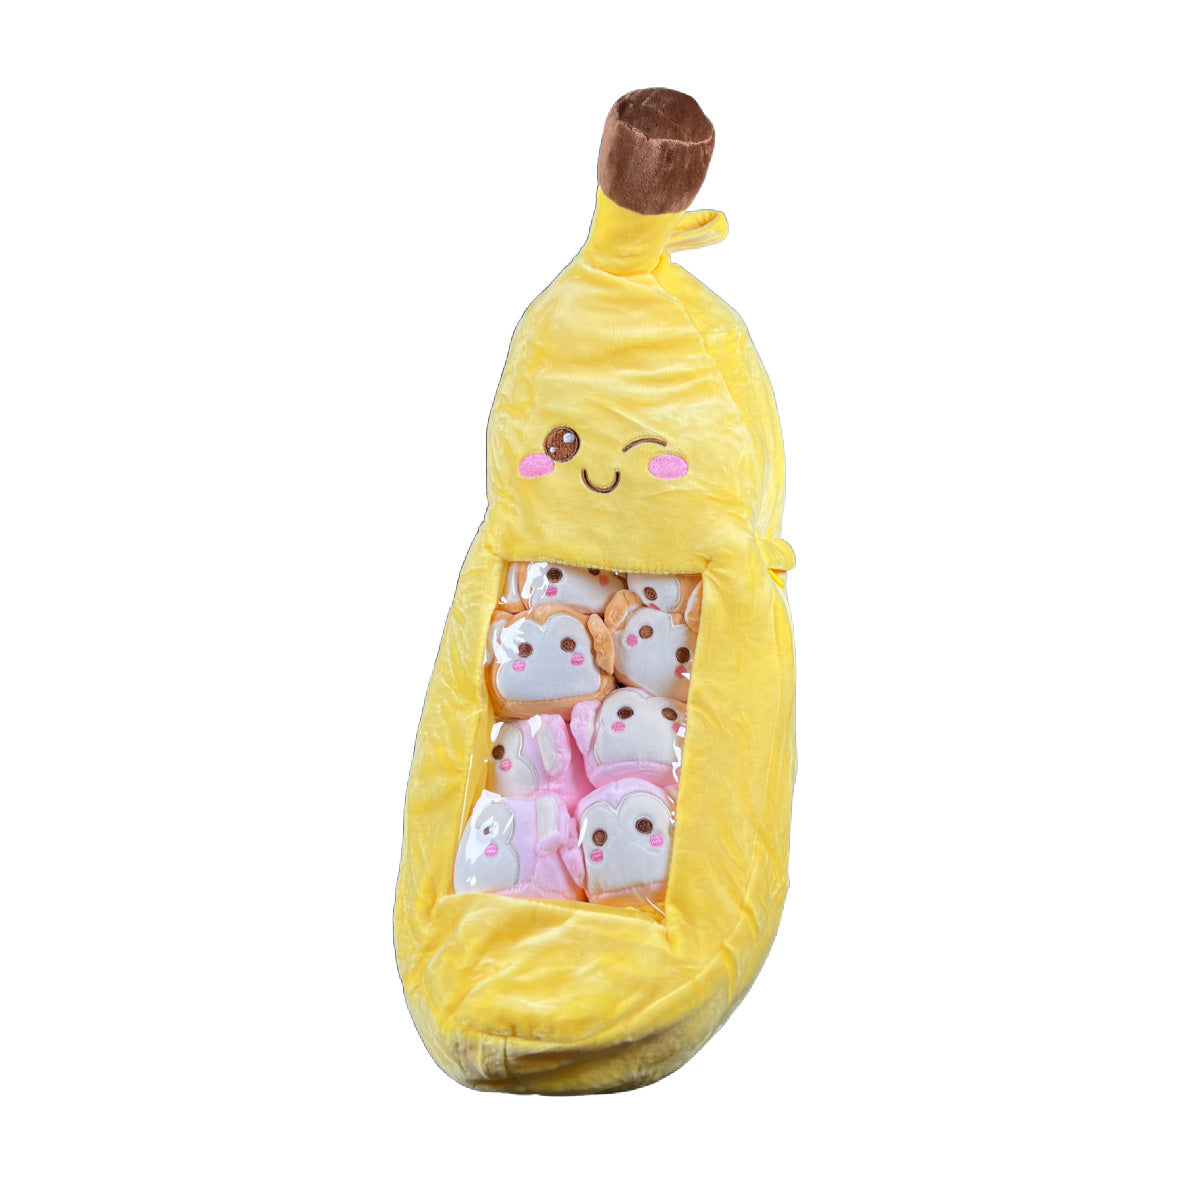 Large Banana with Mini Monkey Plush Pillows - 23" Inches